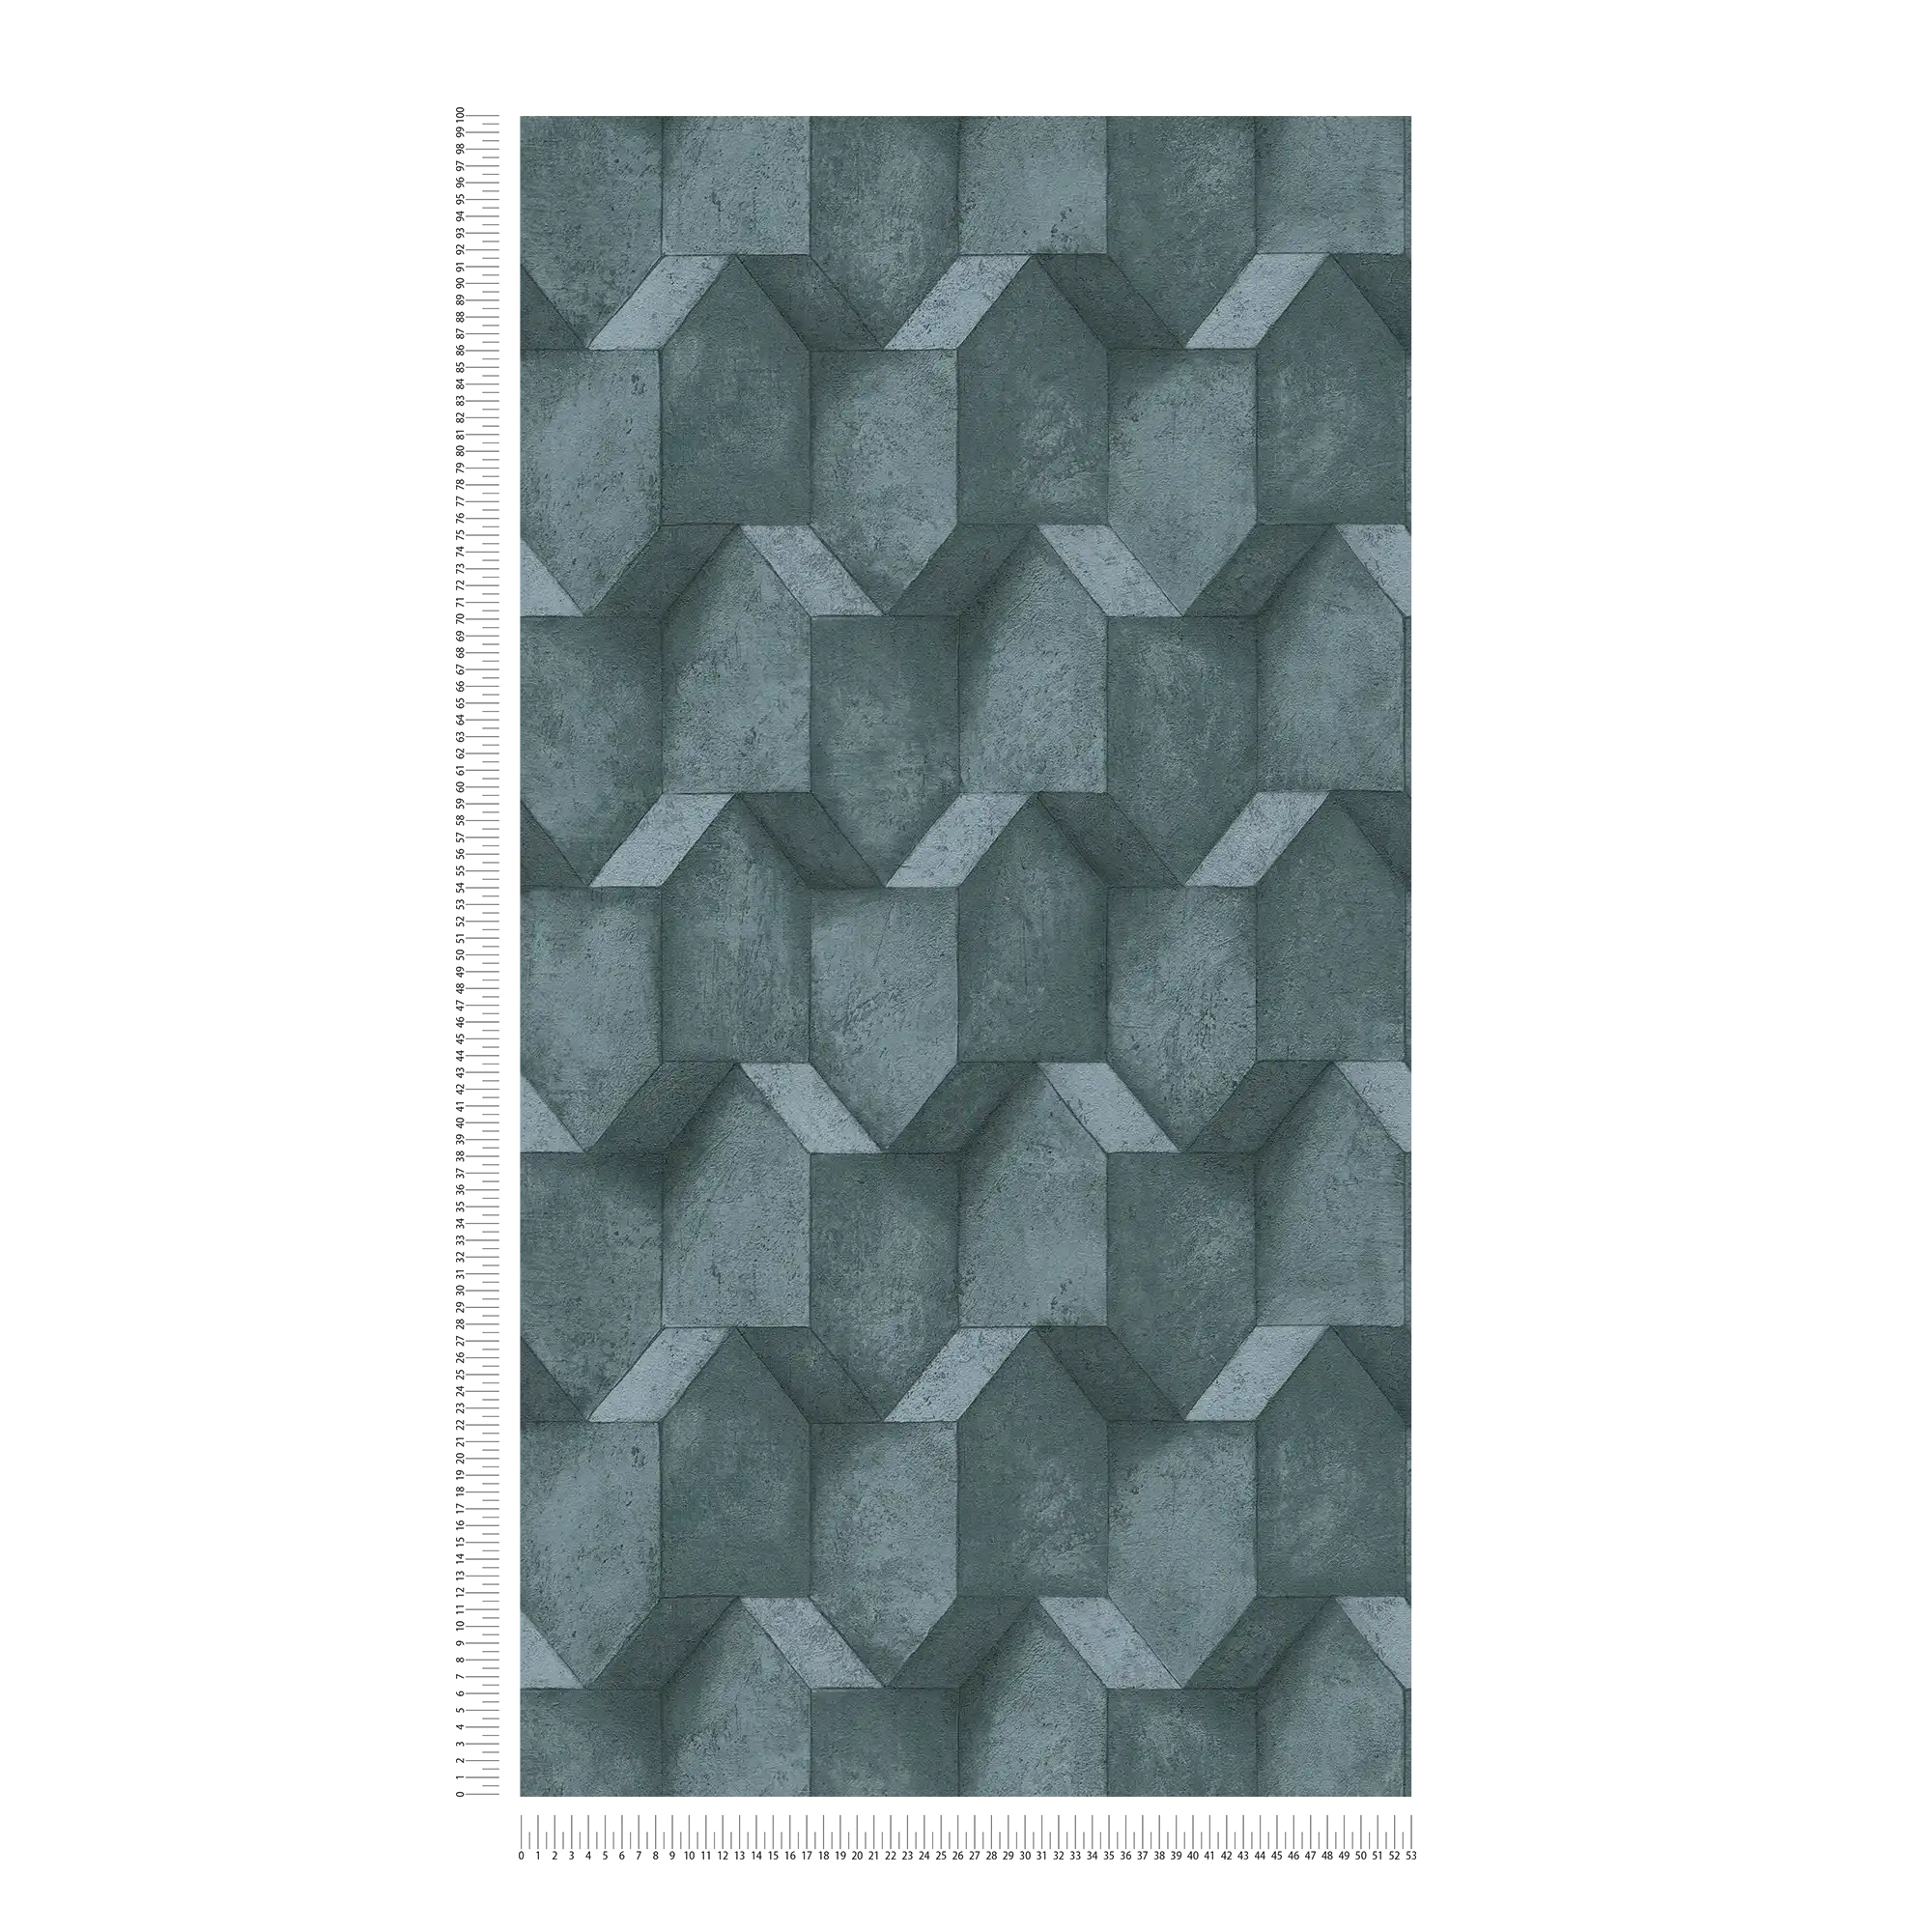             3D Betonoptik Tapete mit Strukturdetails – Blau
        